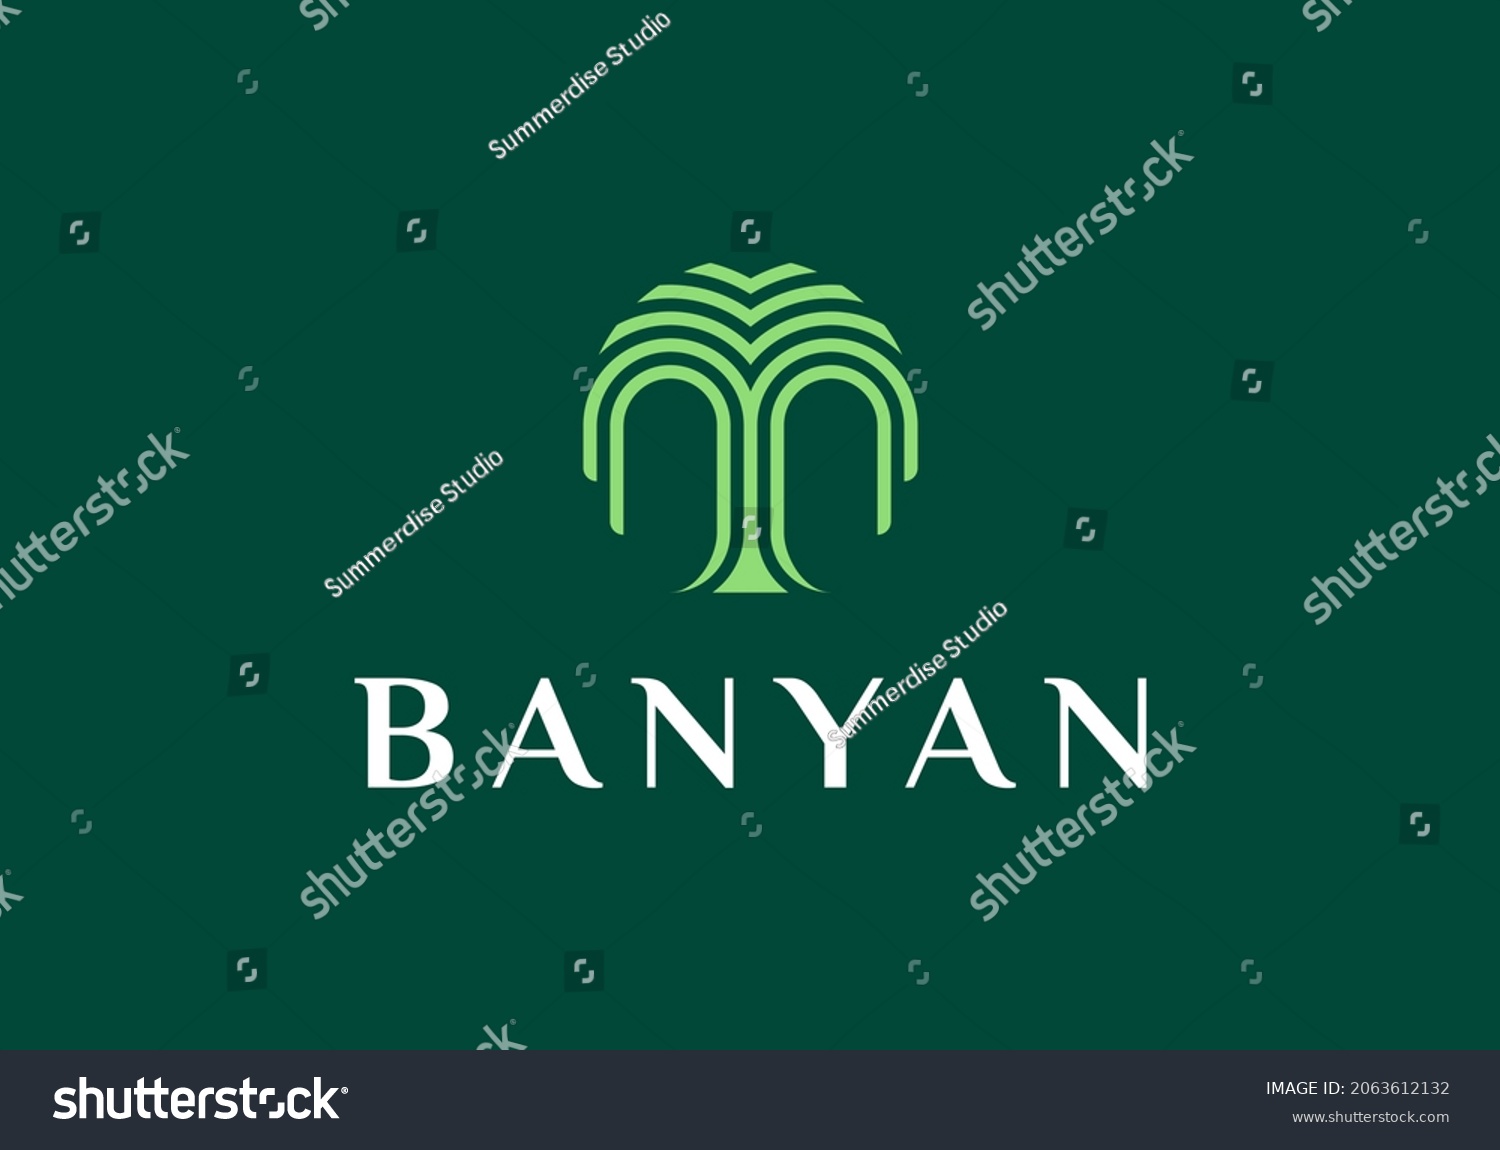 SVG of Illustration of banyan tree minimalist creative logo
 svg